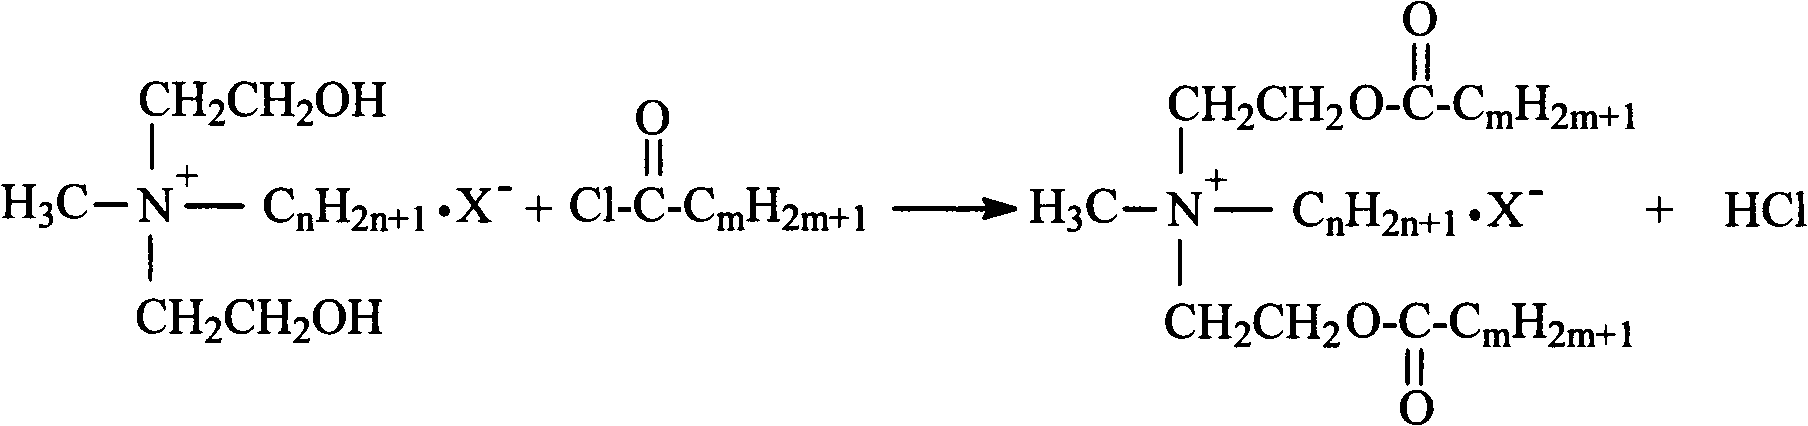 Synthetic process of double-long-chain diester quaternary ammonium salt